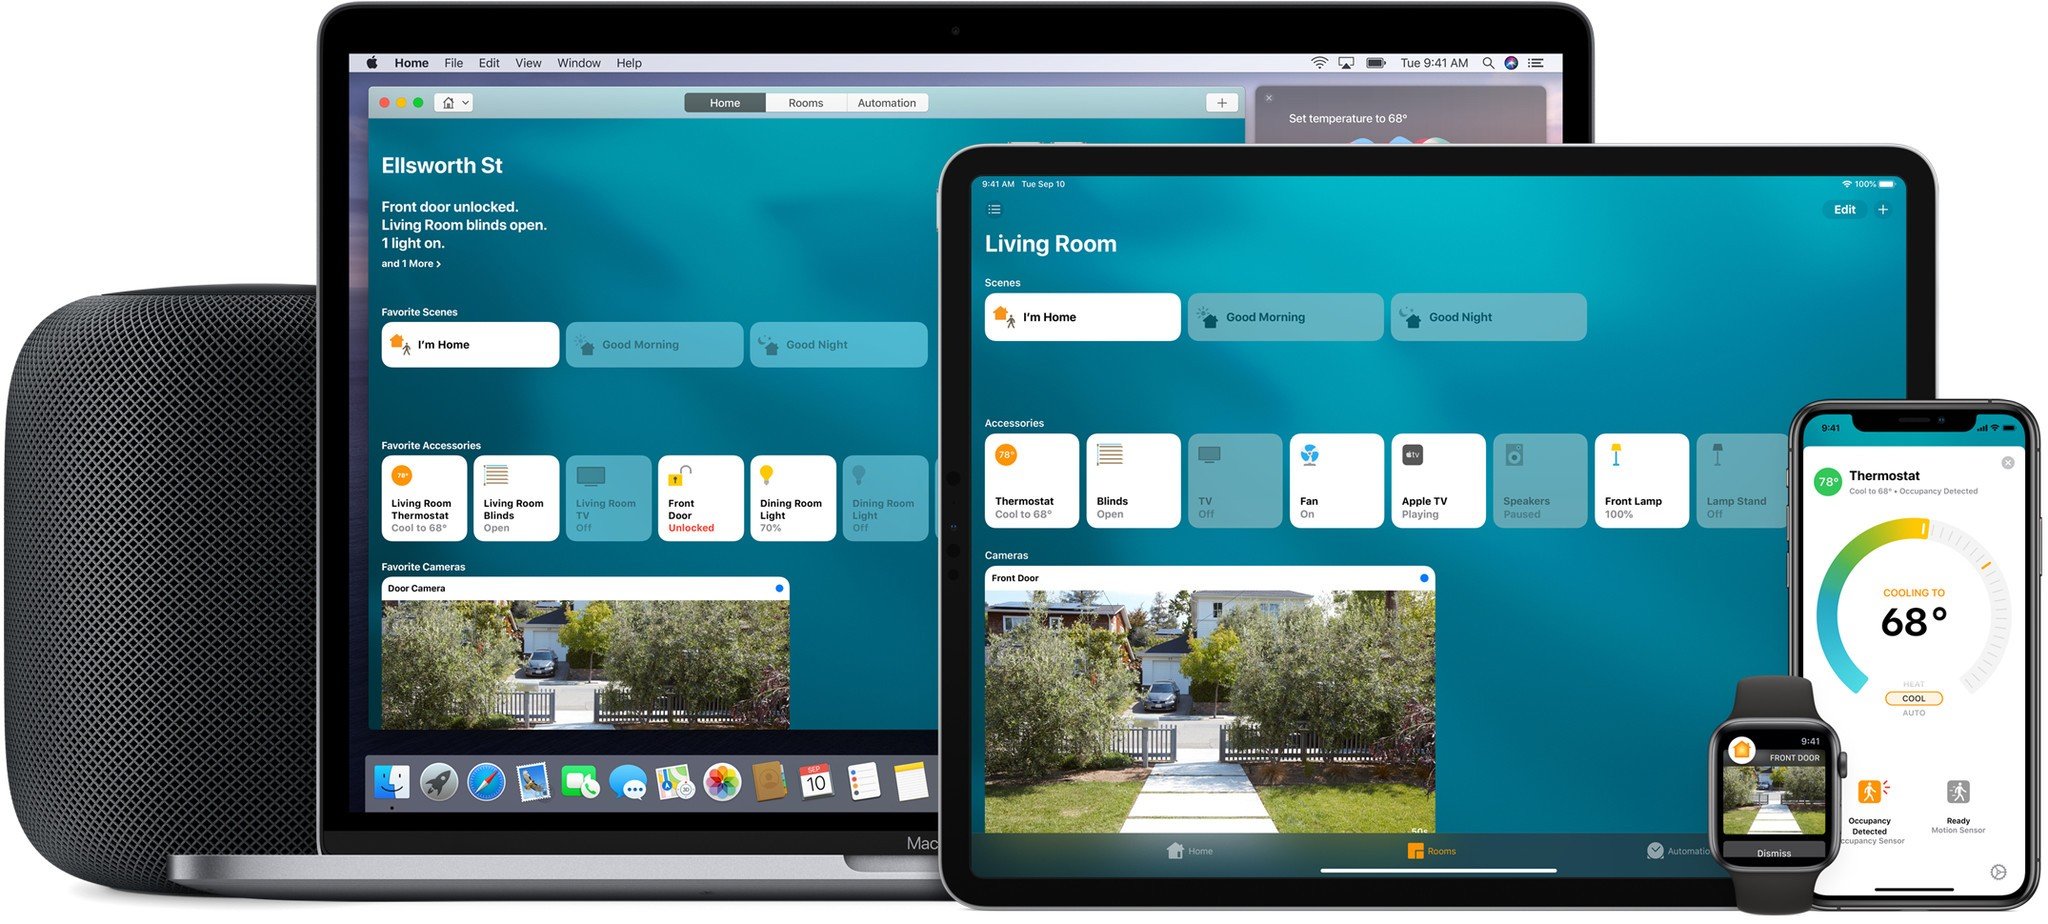 HomeKit Home app shown on Apple product line